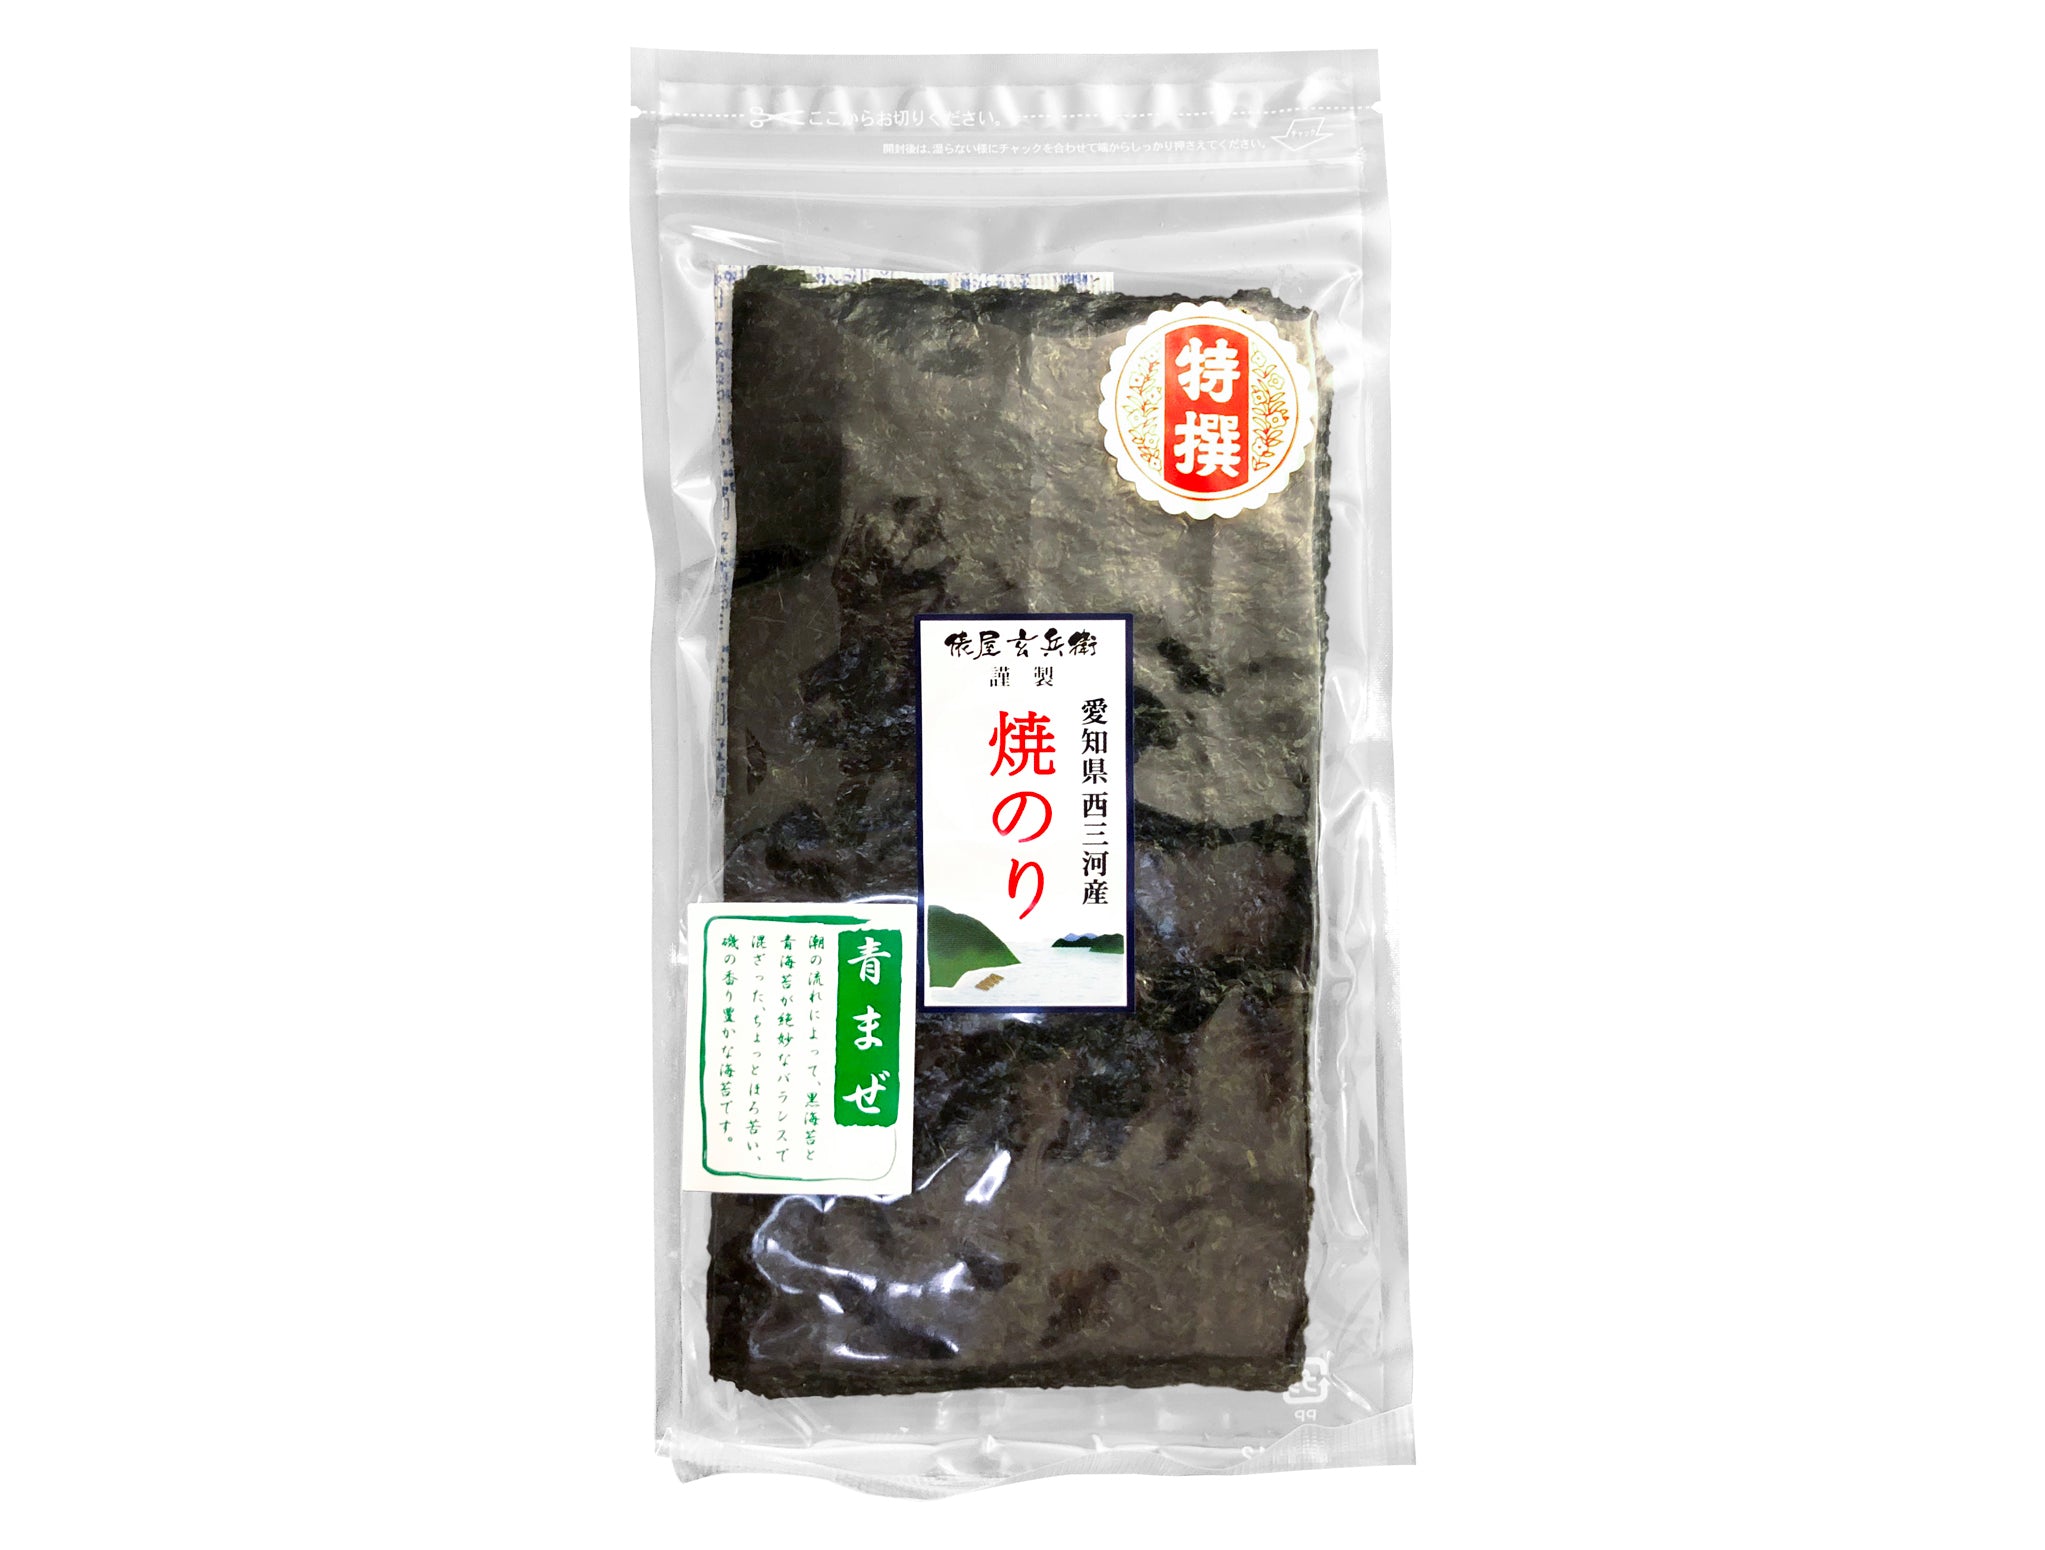 Japanese Premium Seaweed 10pcs (Half Cut) 焼海苔